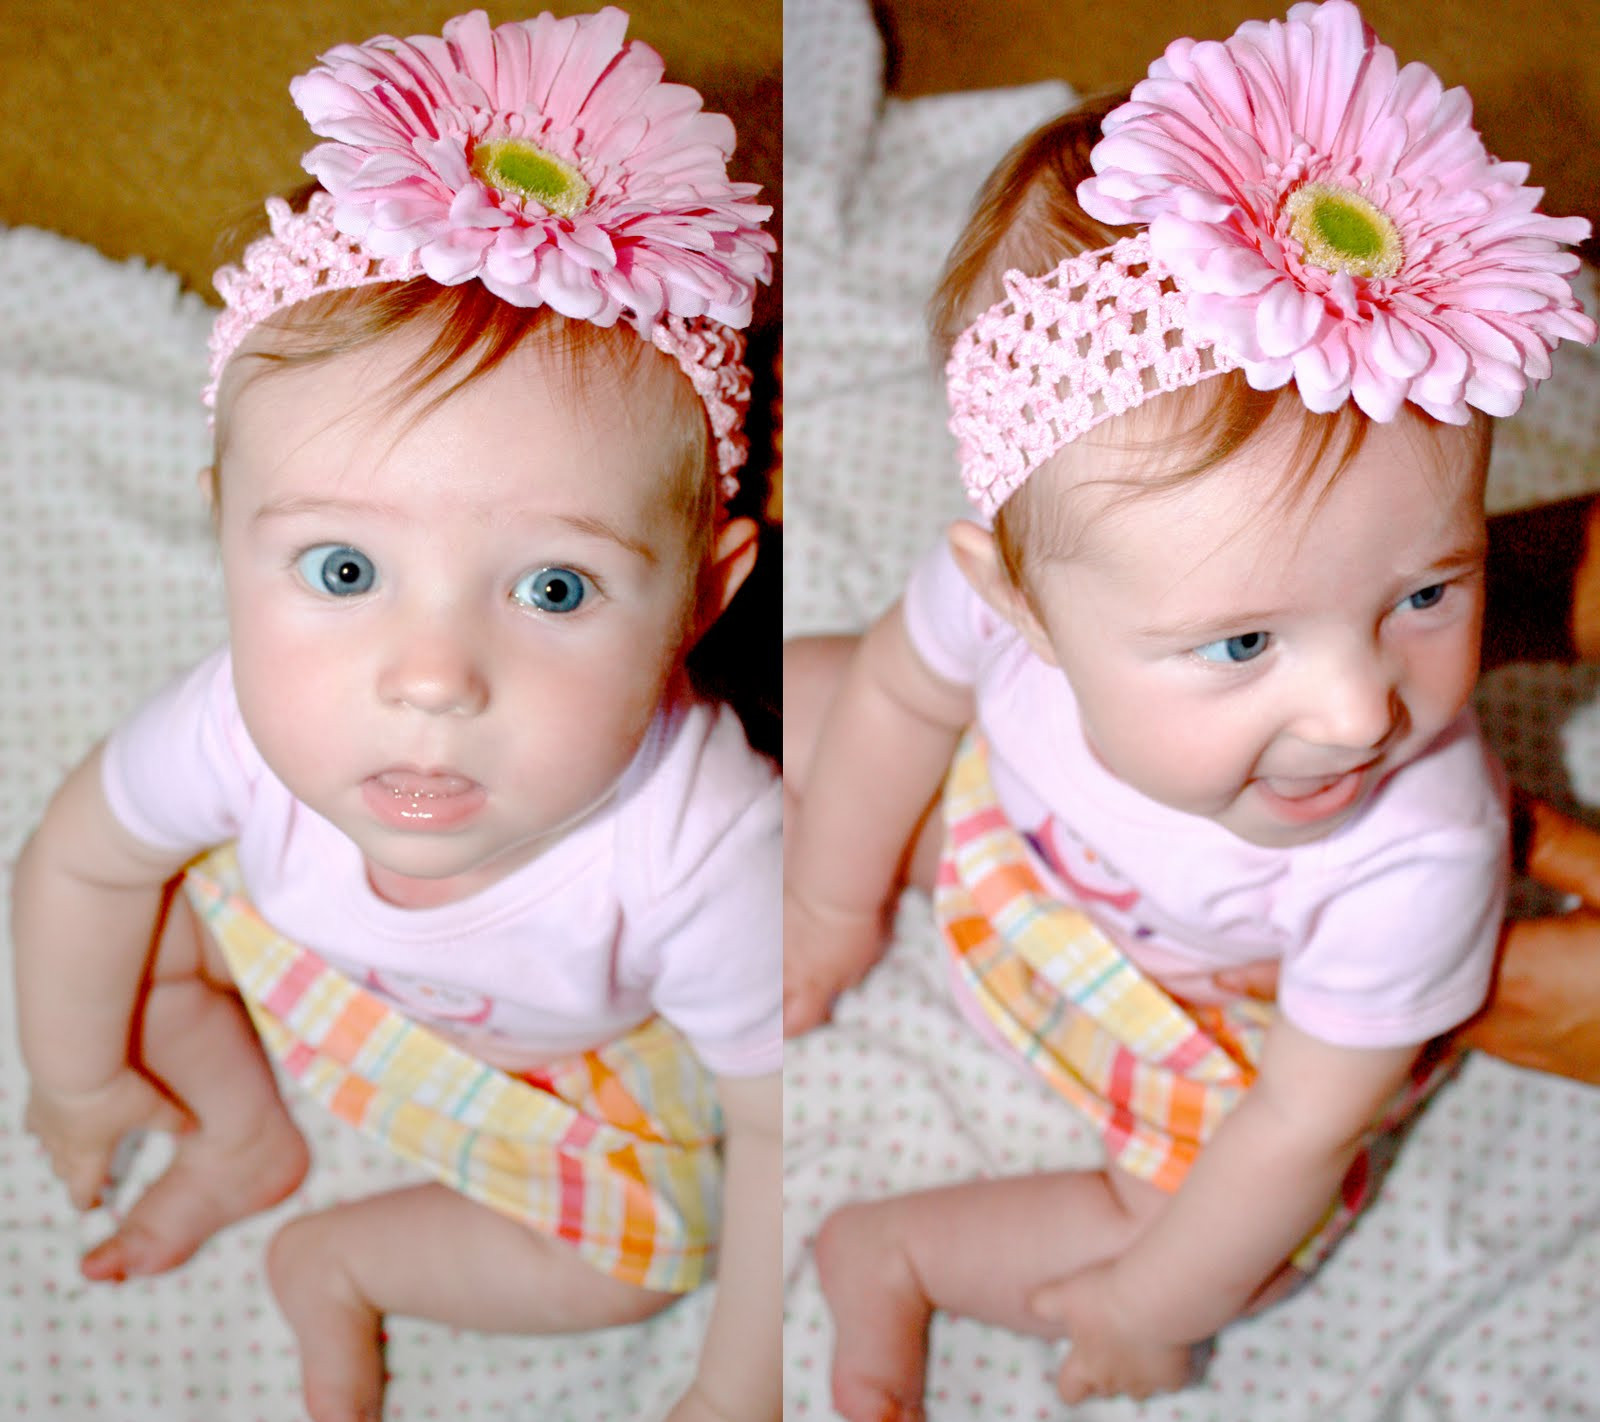 DIY Baby Headbands With Flowers
 DIY Baby Flower Headbands Wild Oak Stream